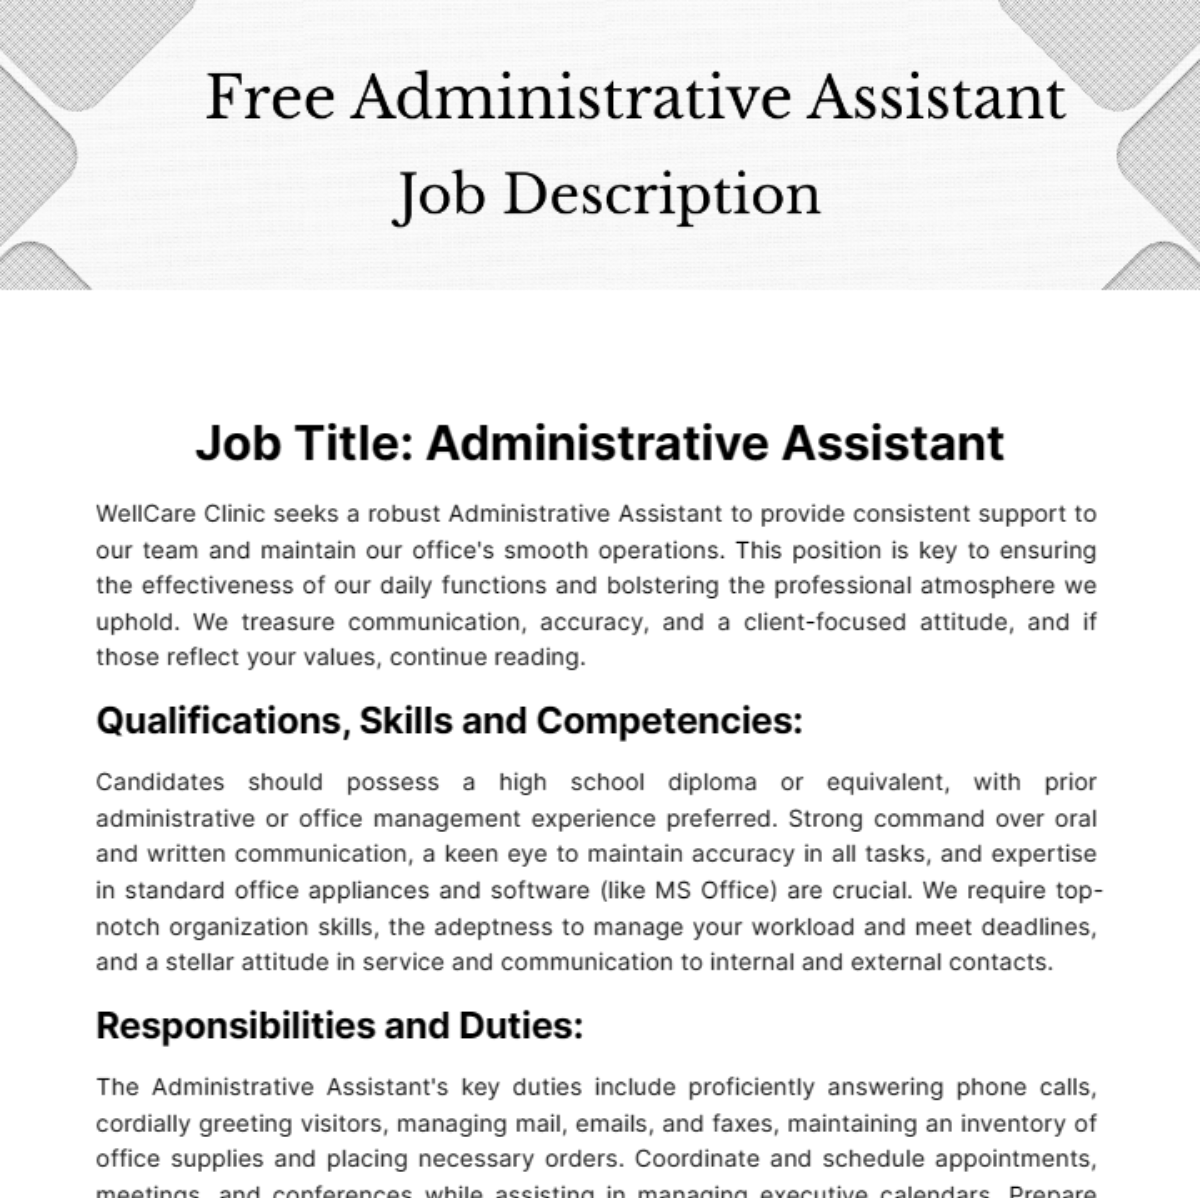 Free Administrative Assistant Job Description Template